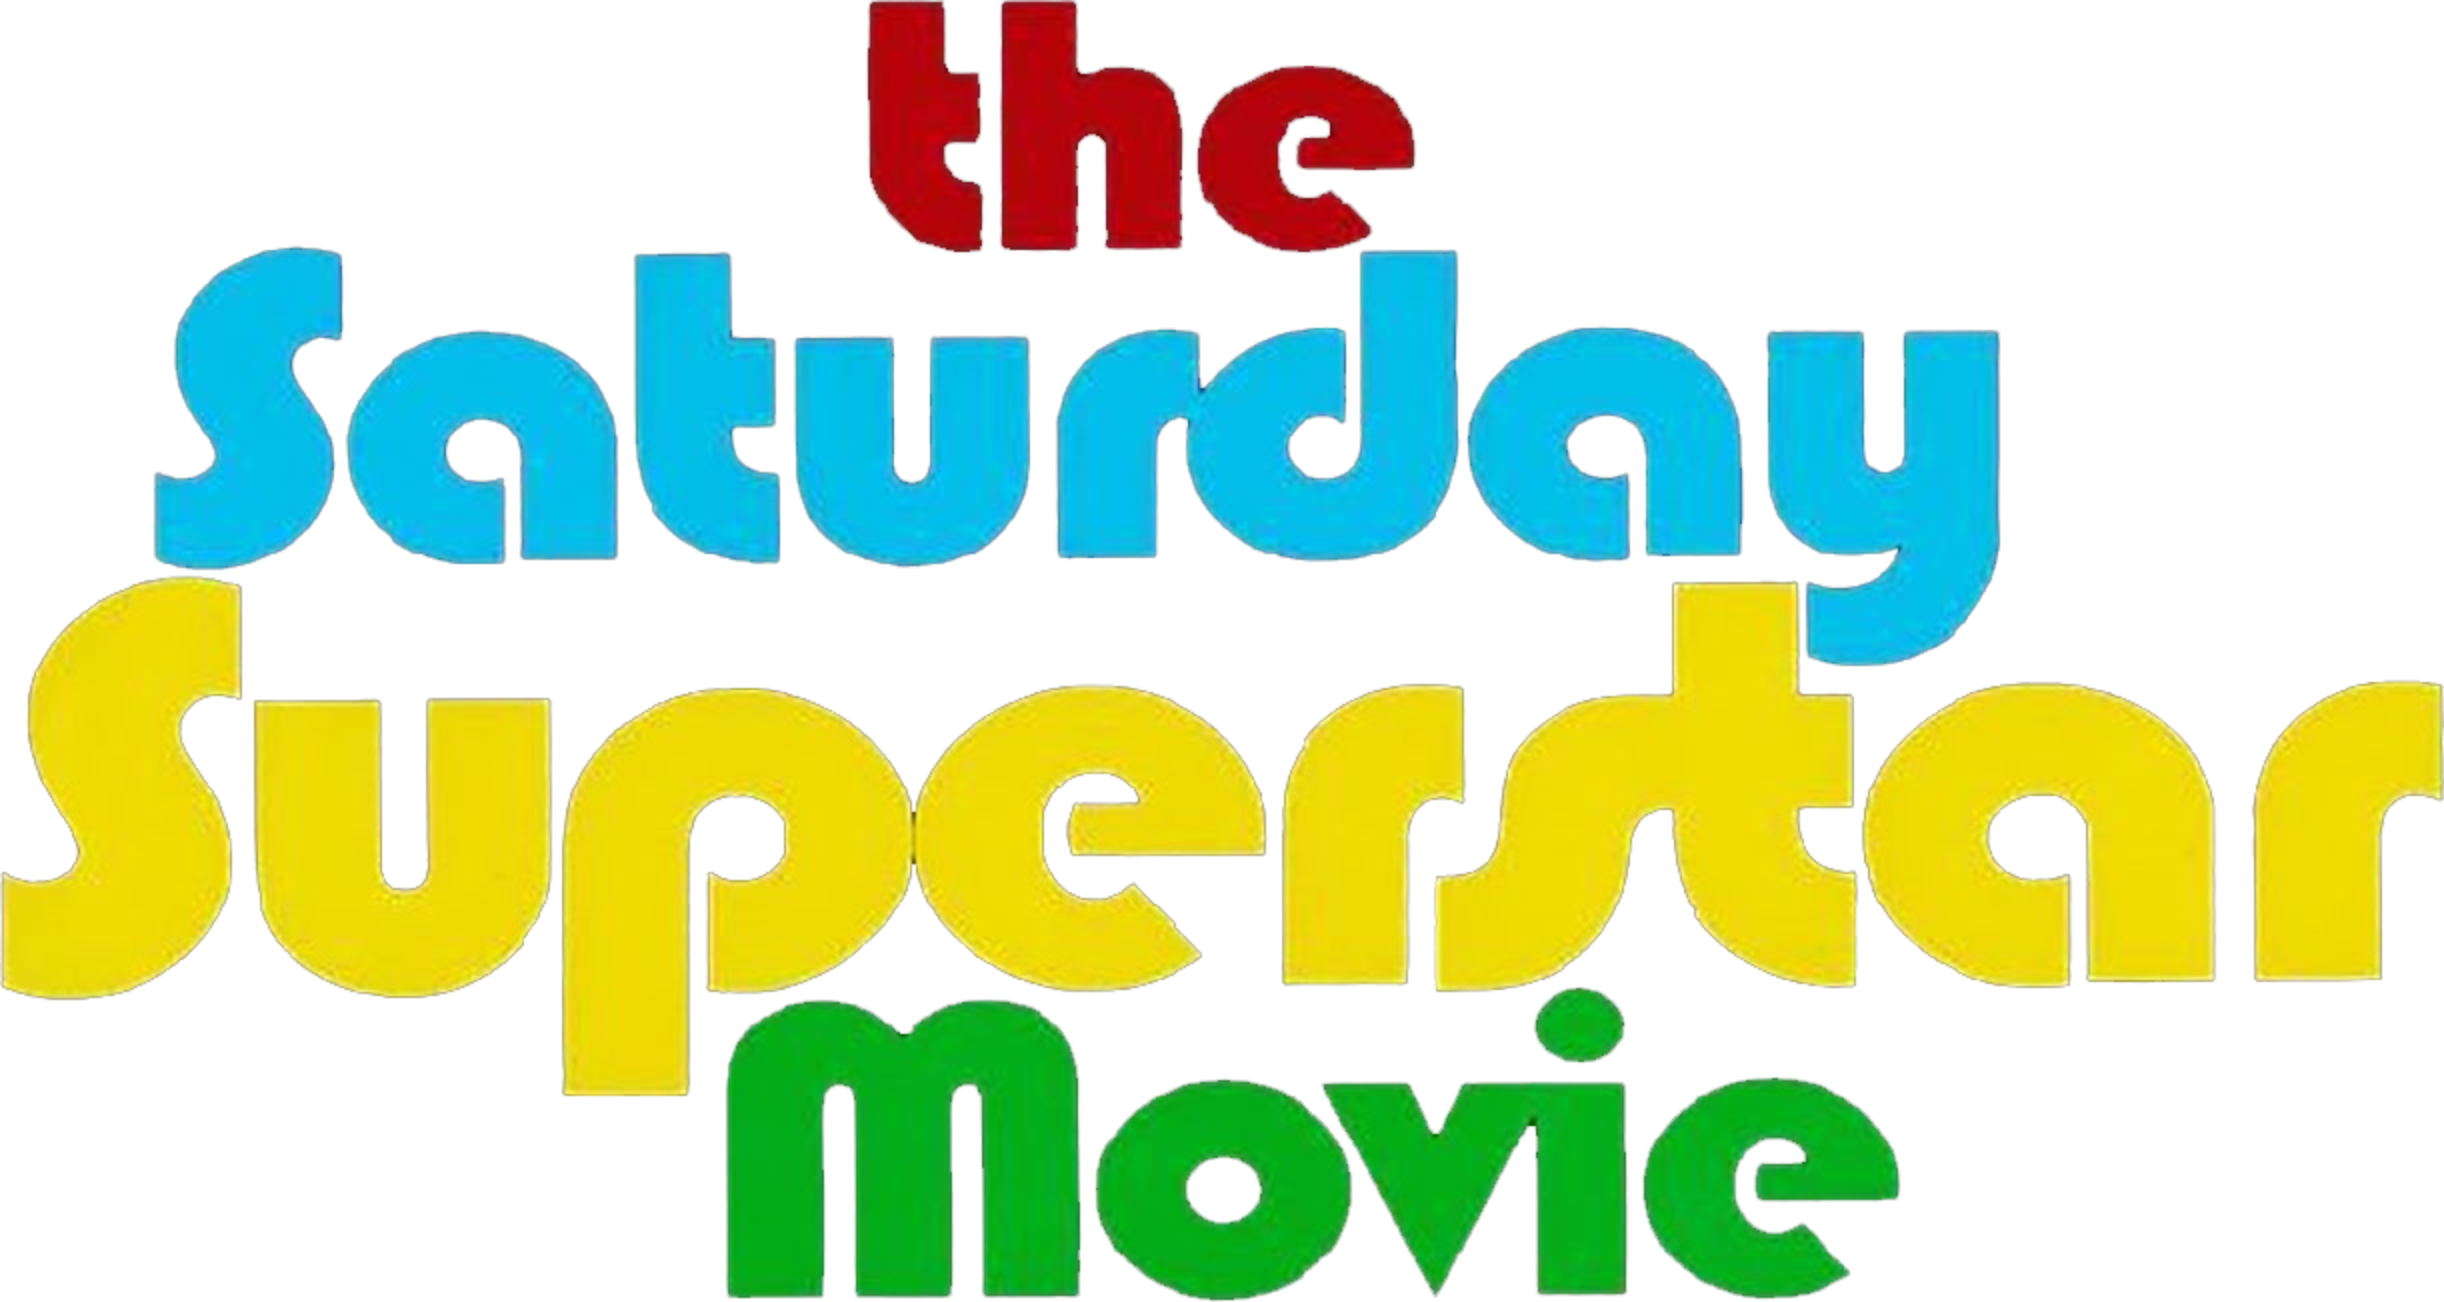 The ABC Saturday Superstar Movie Complete (1 DVD Box Set)